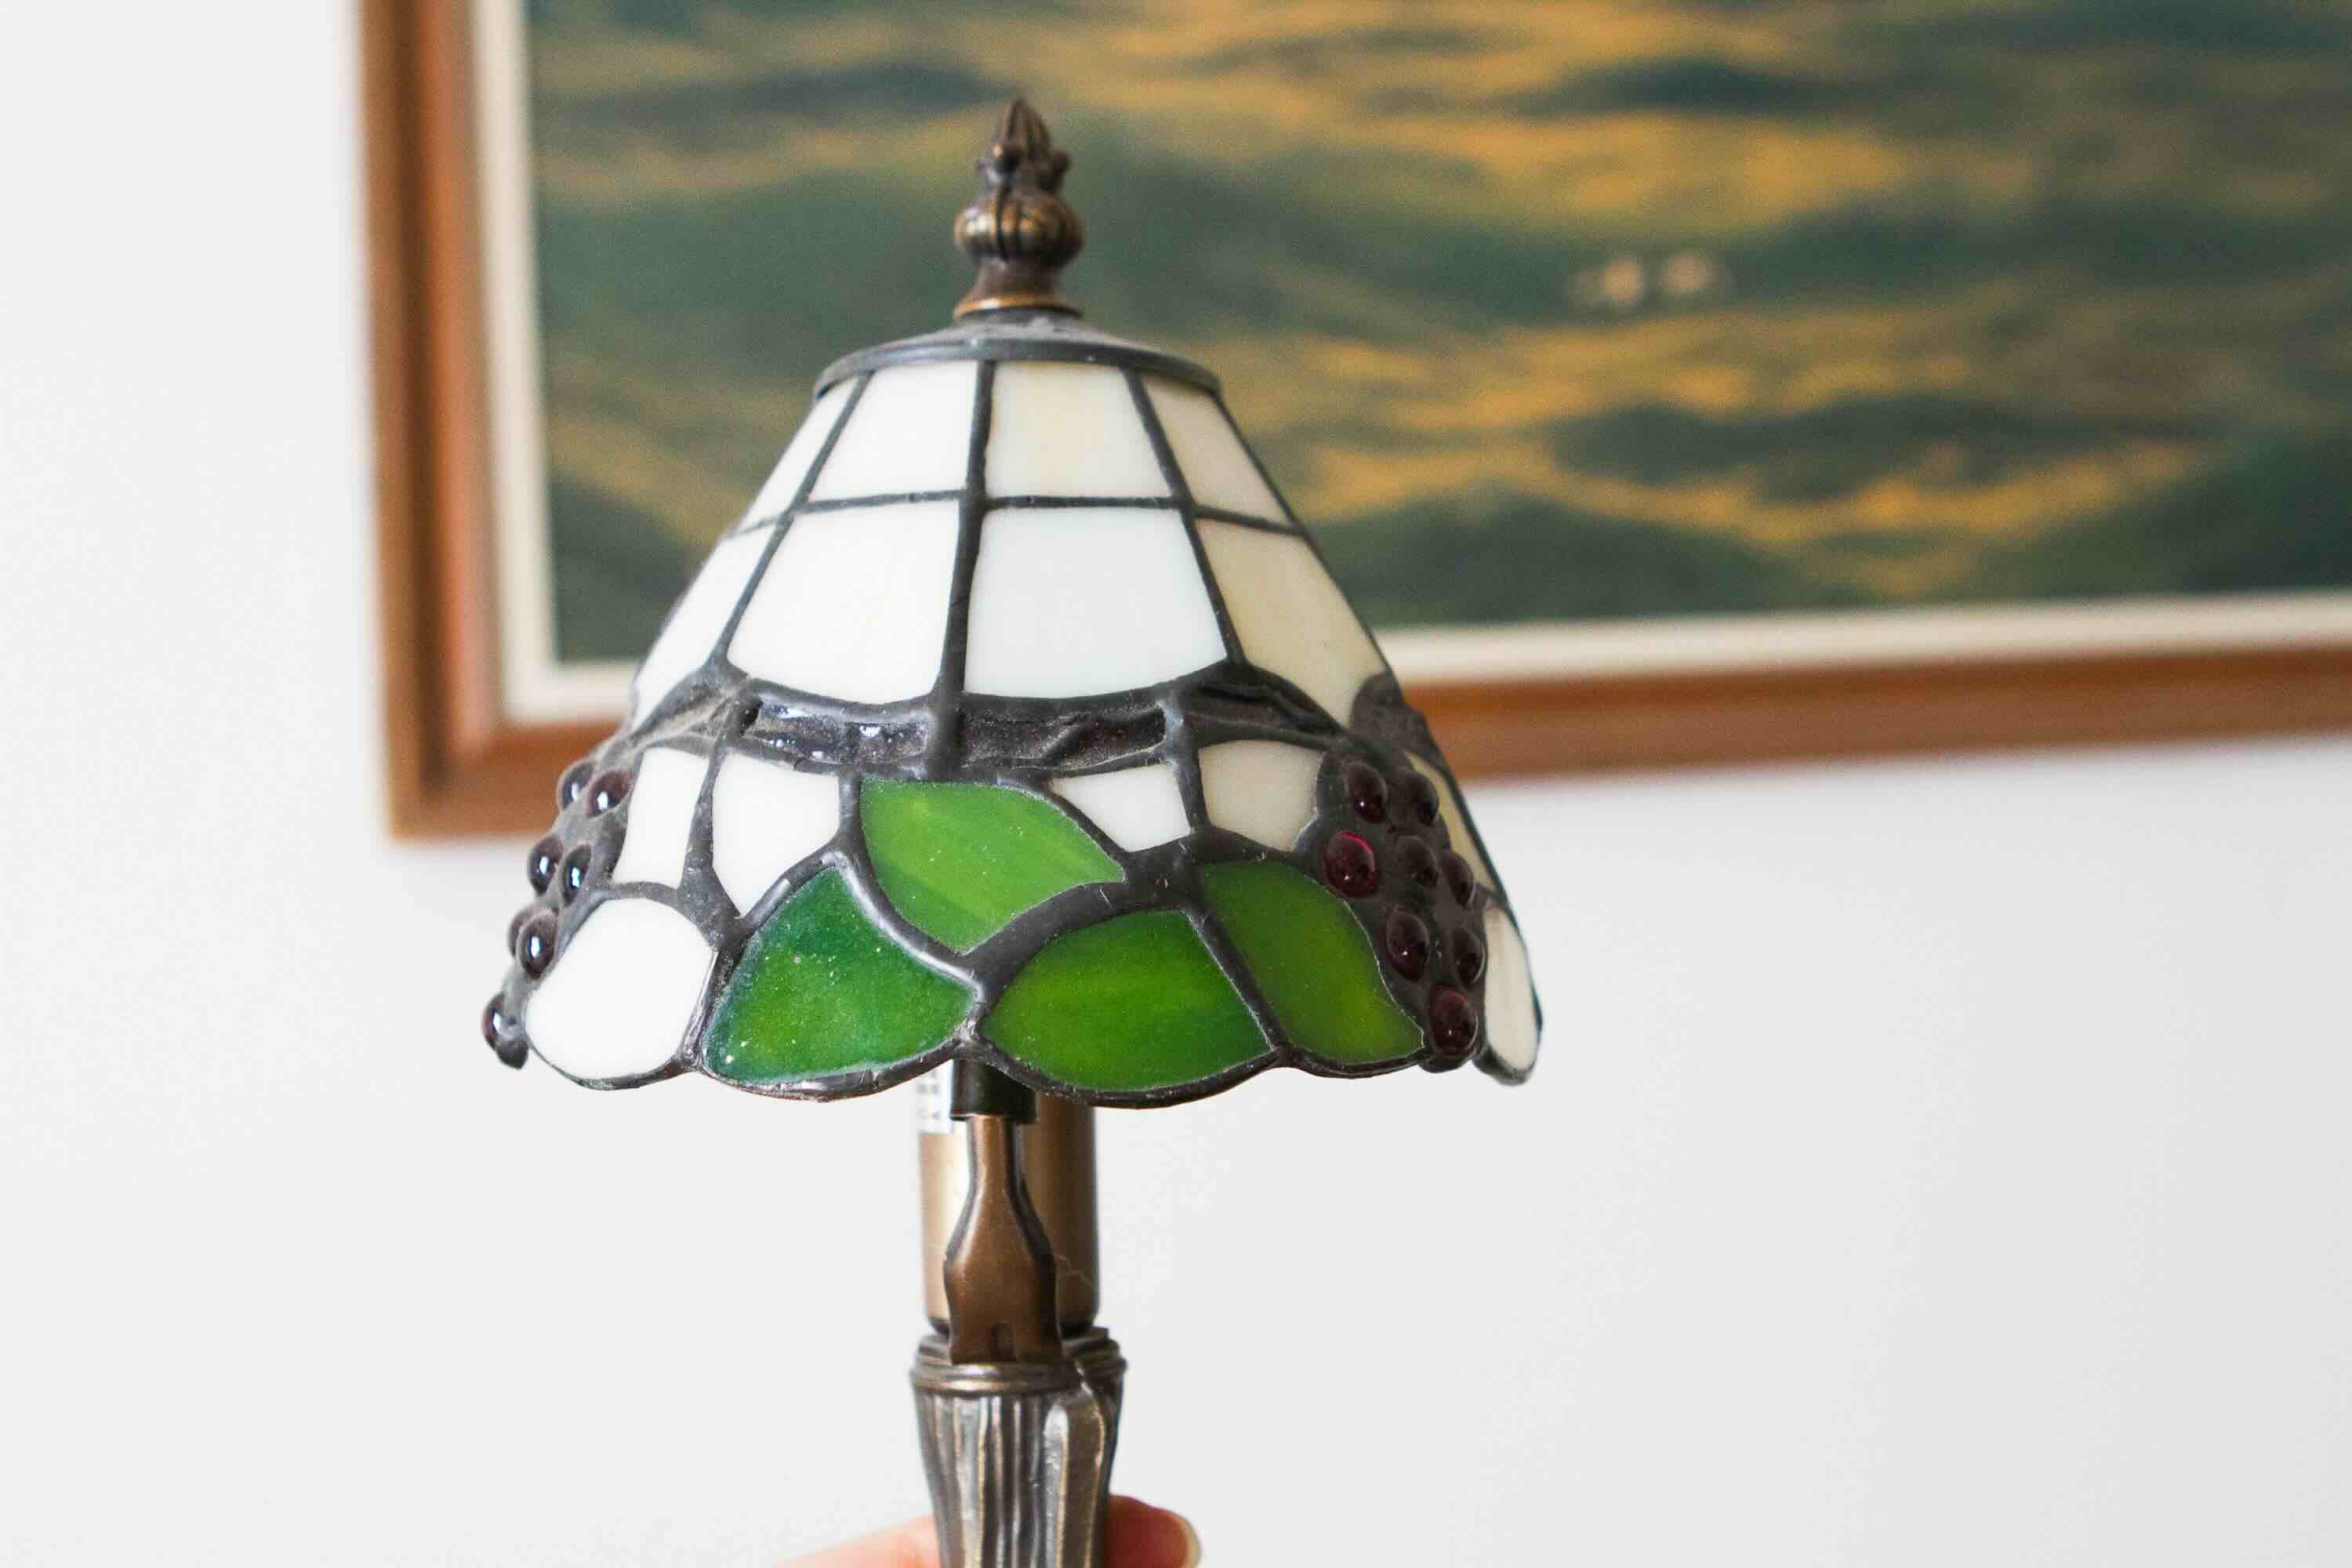 How To Identify A Stiffel Lamp